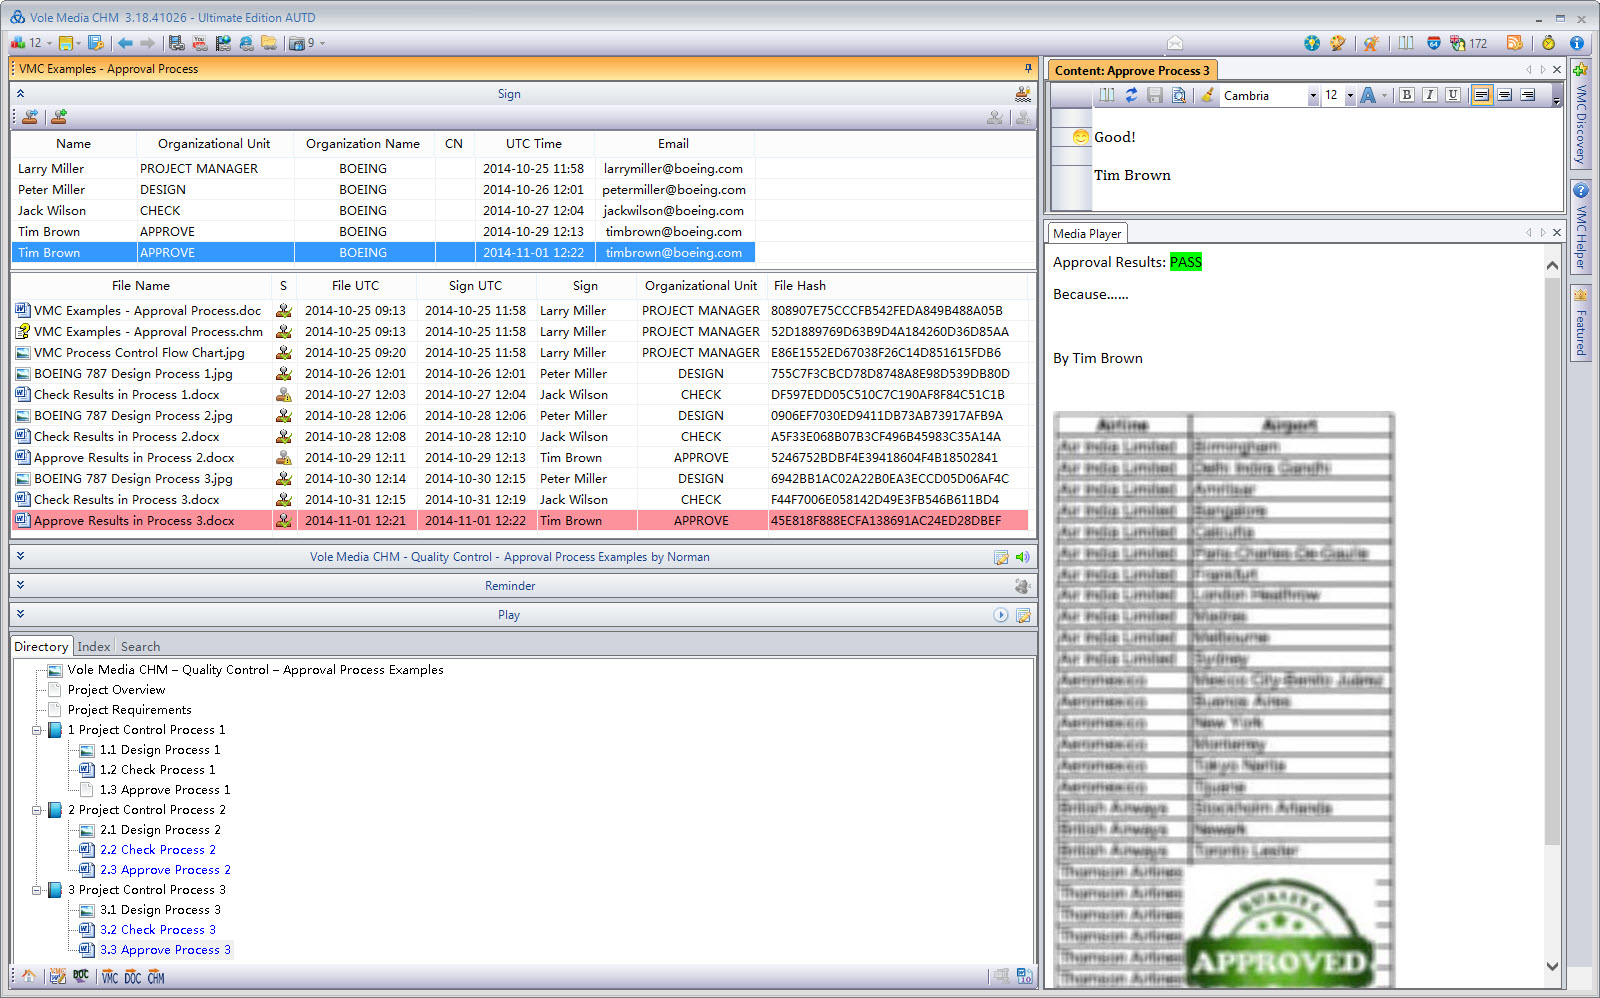 Vole Media CHM 3.49.60802 software screenshot